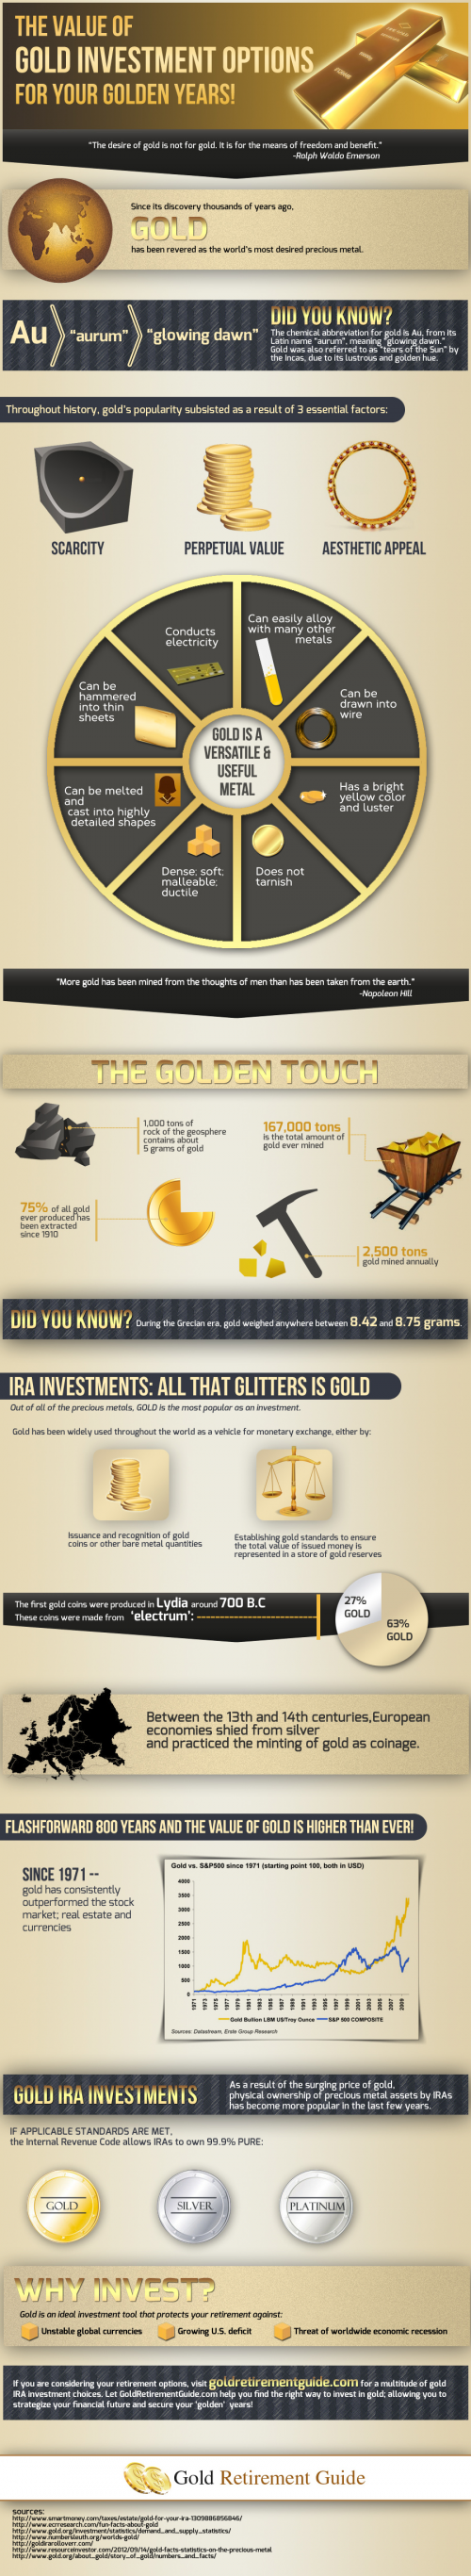 GoldRetirementGuide.com'